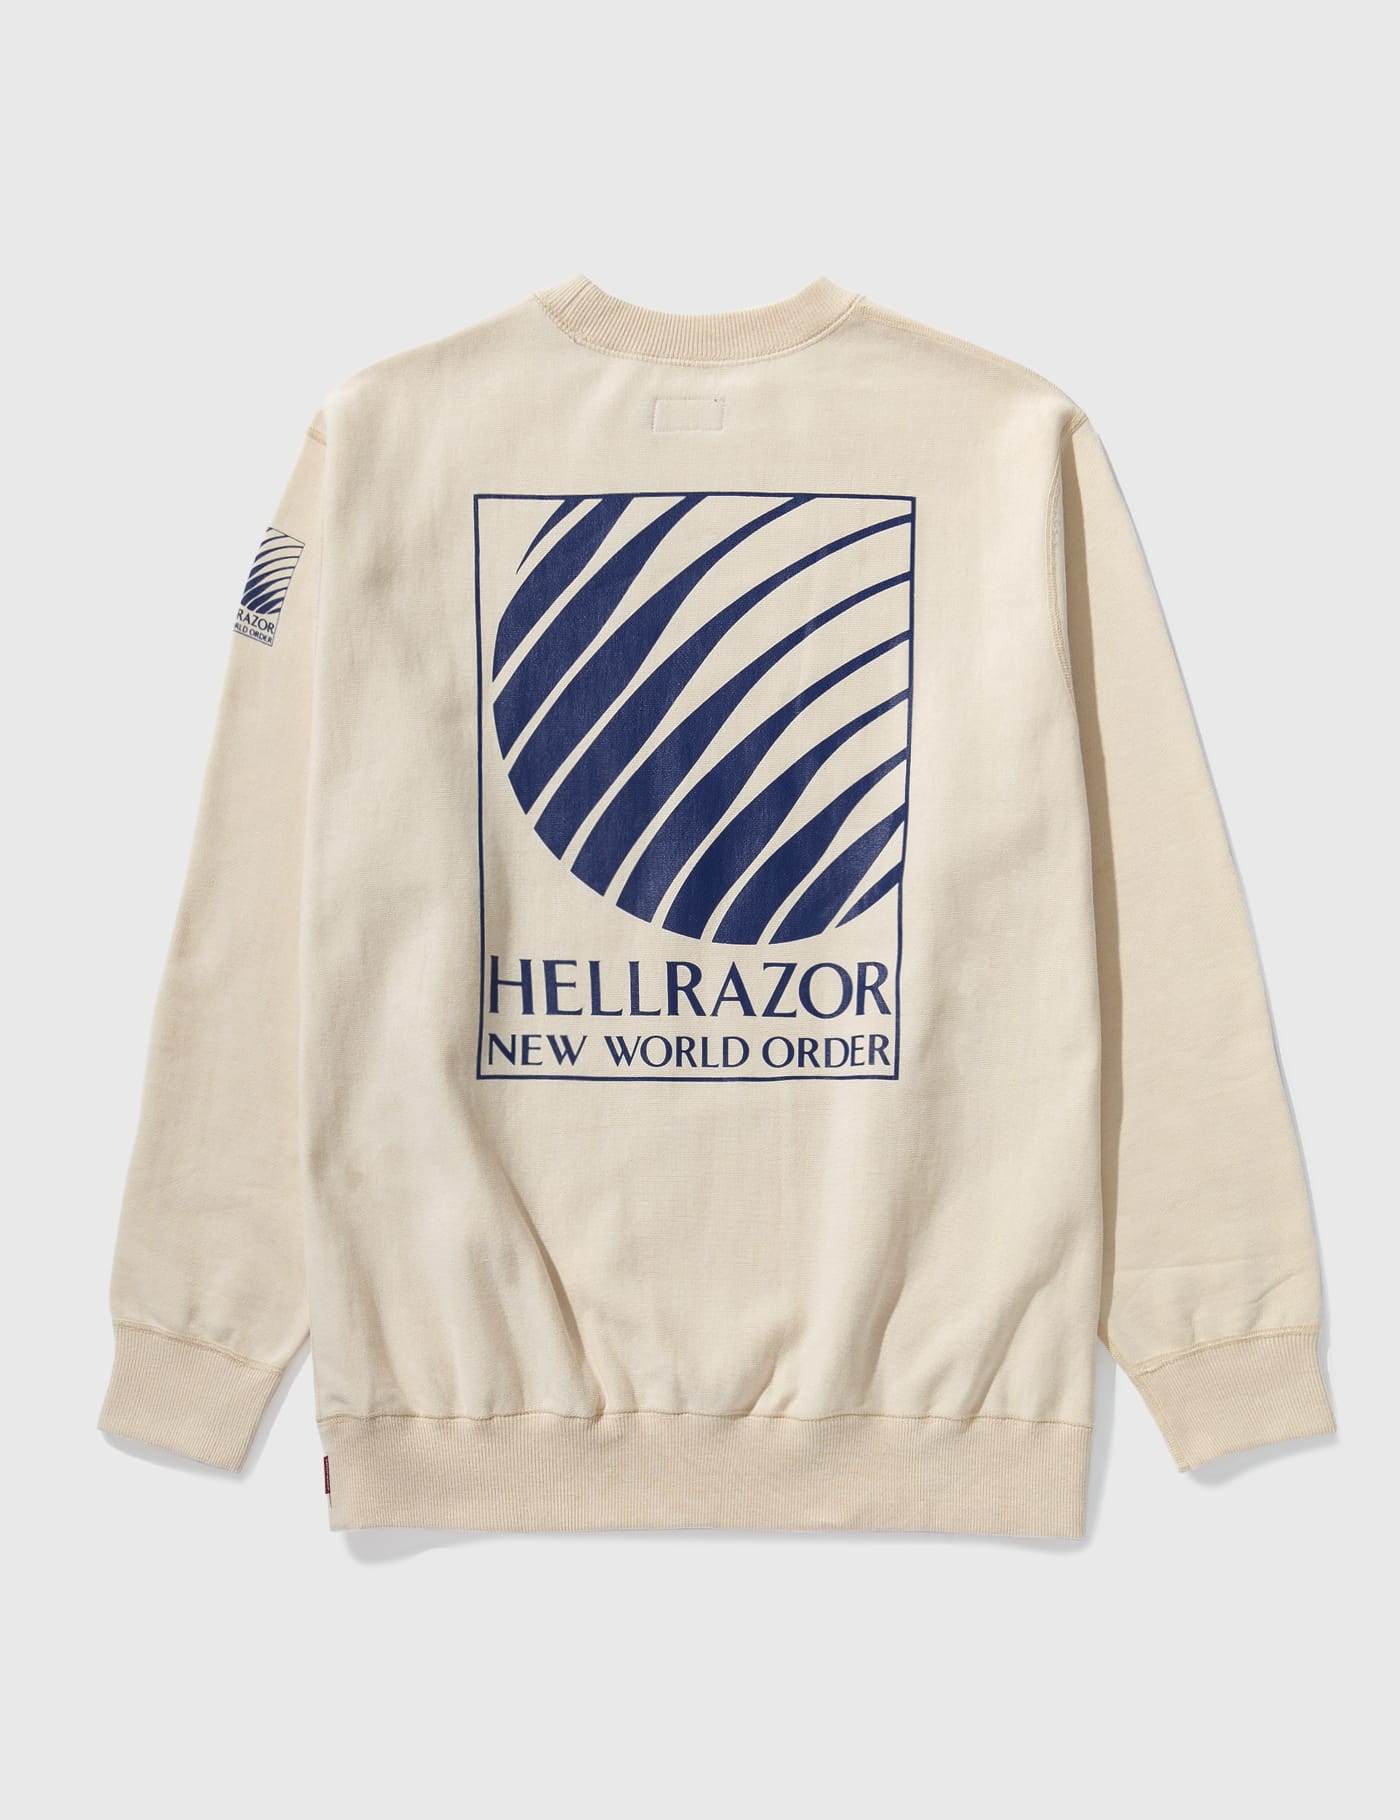 Hellrazor   New World Order Crewneck Sweatshirt   HBX   Globally